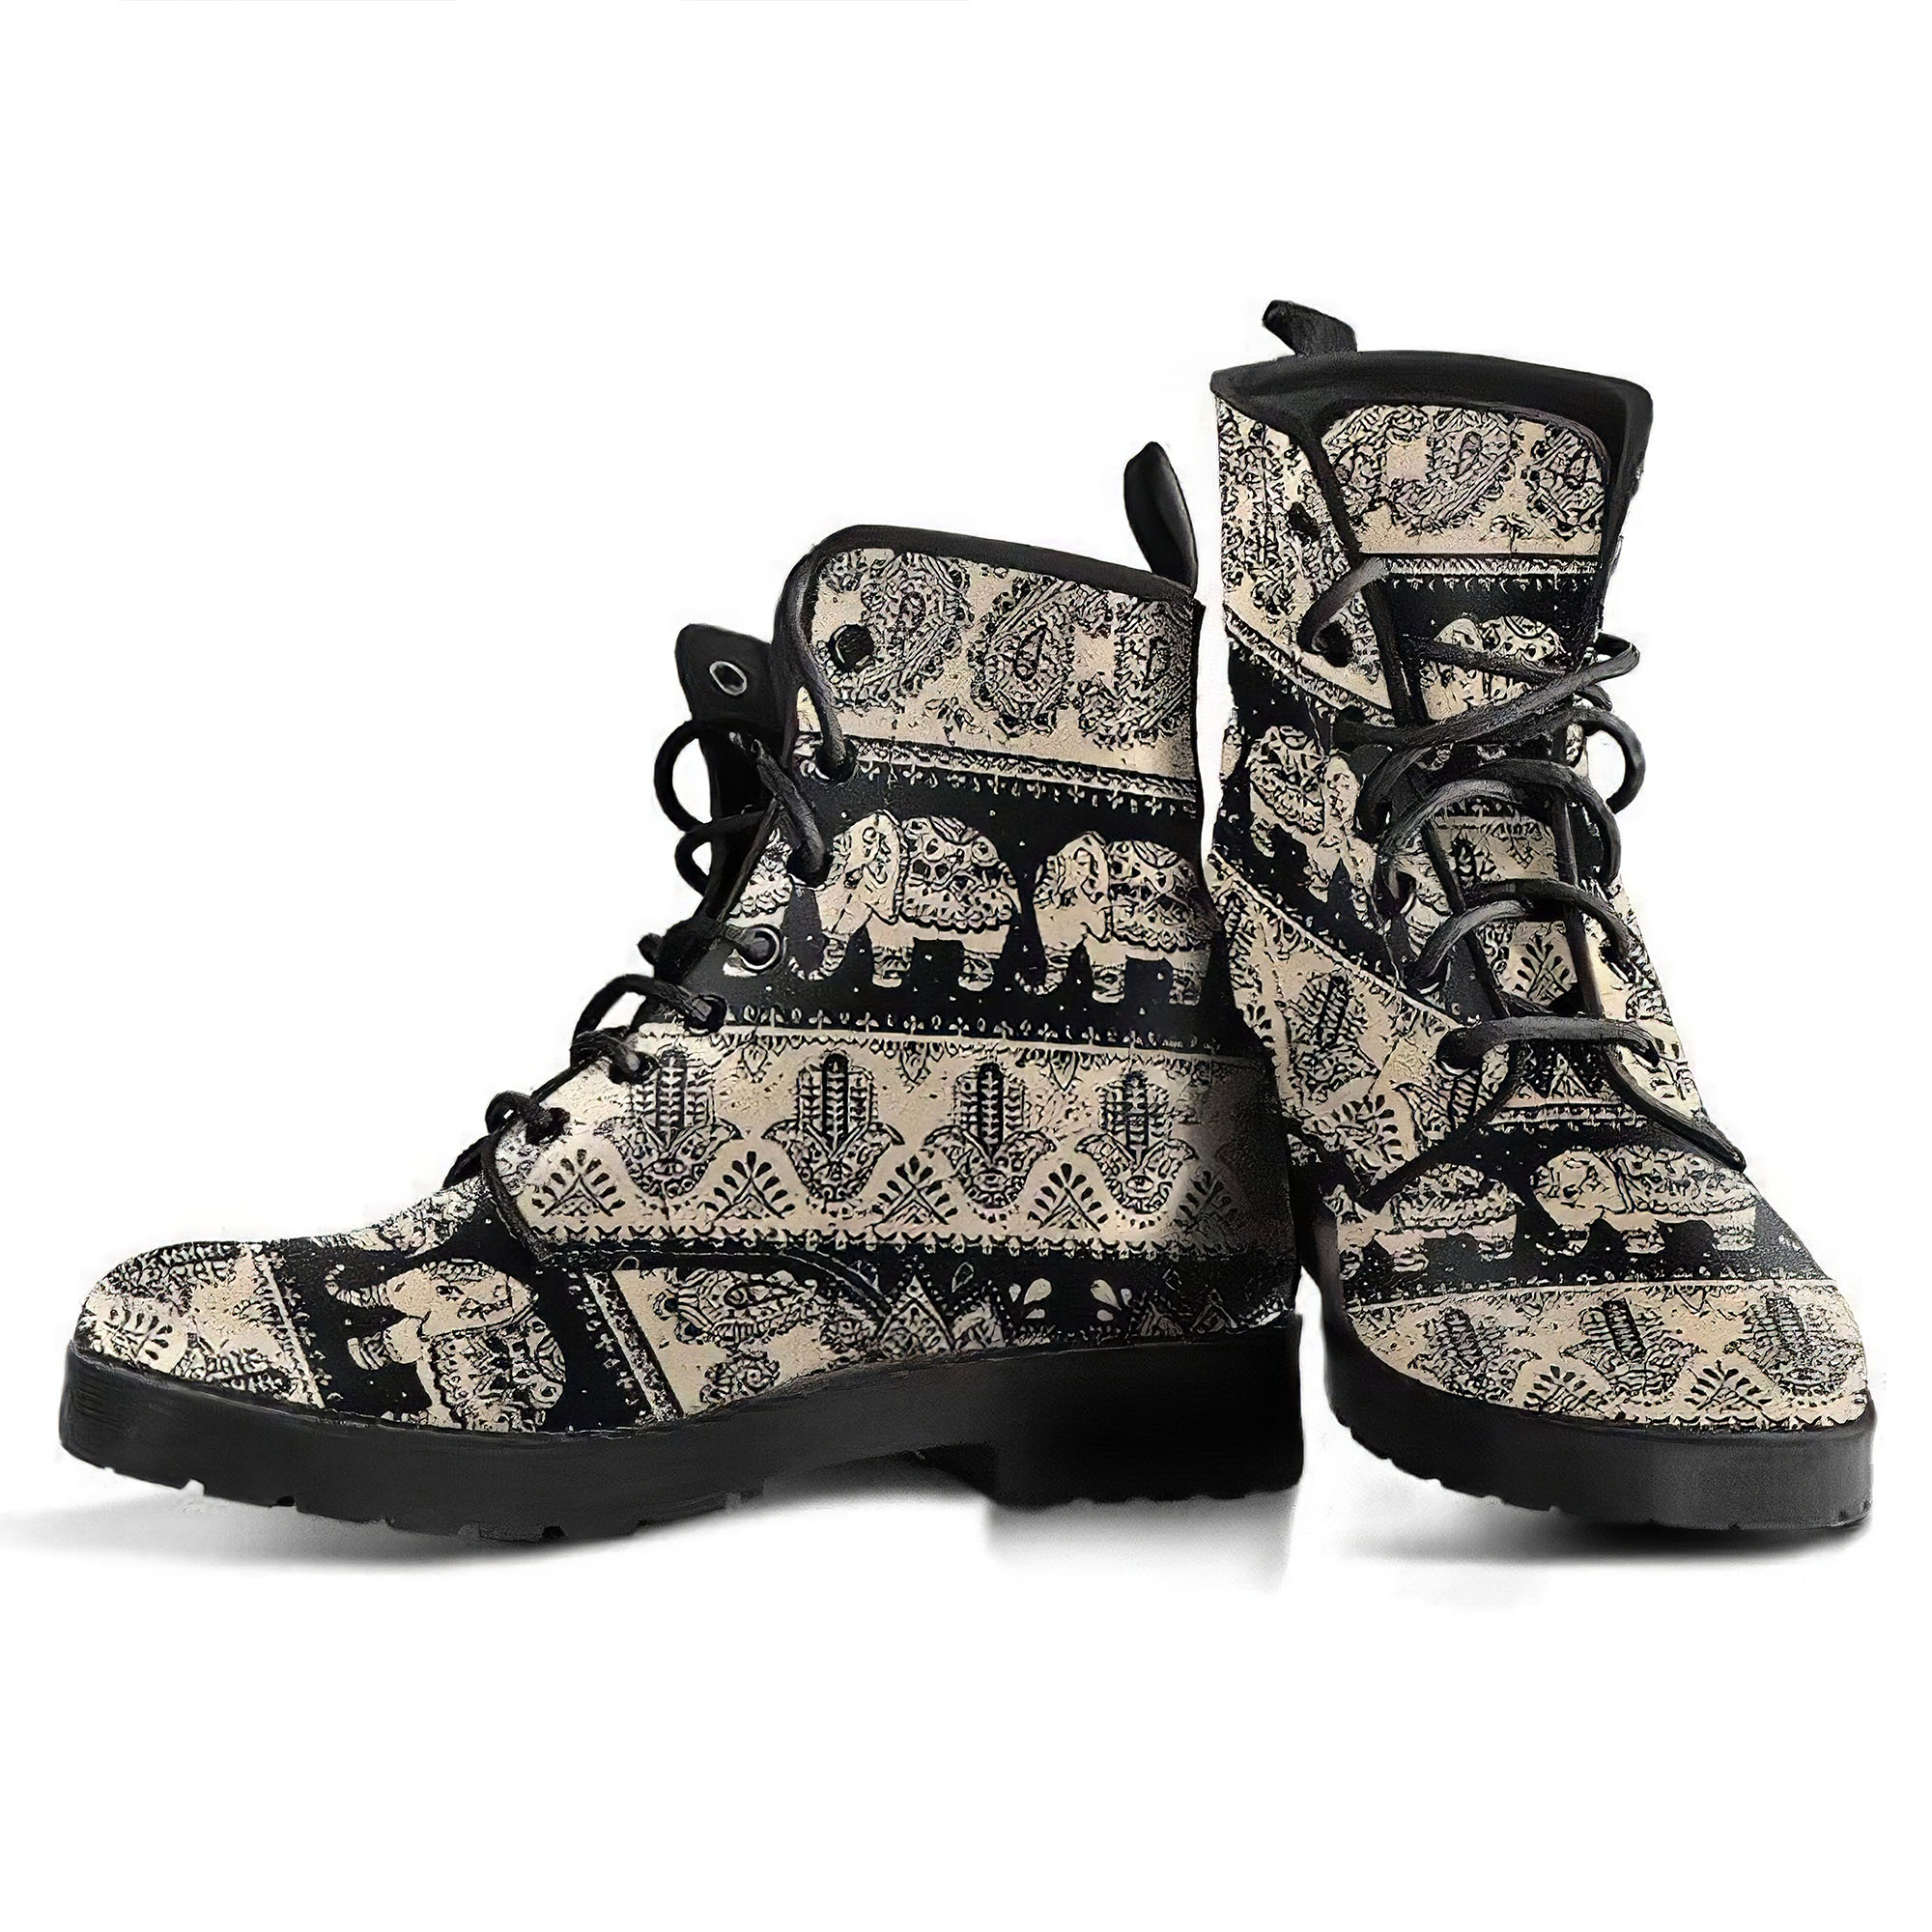 mandala-elephant-pattern-womens-leather-boots-gp-main.jpg